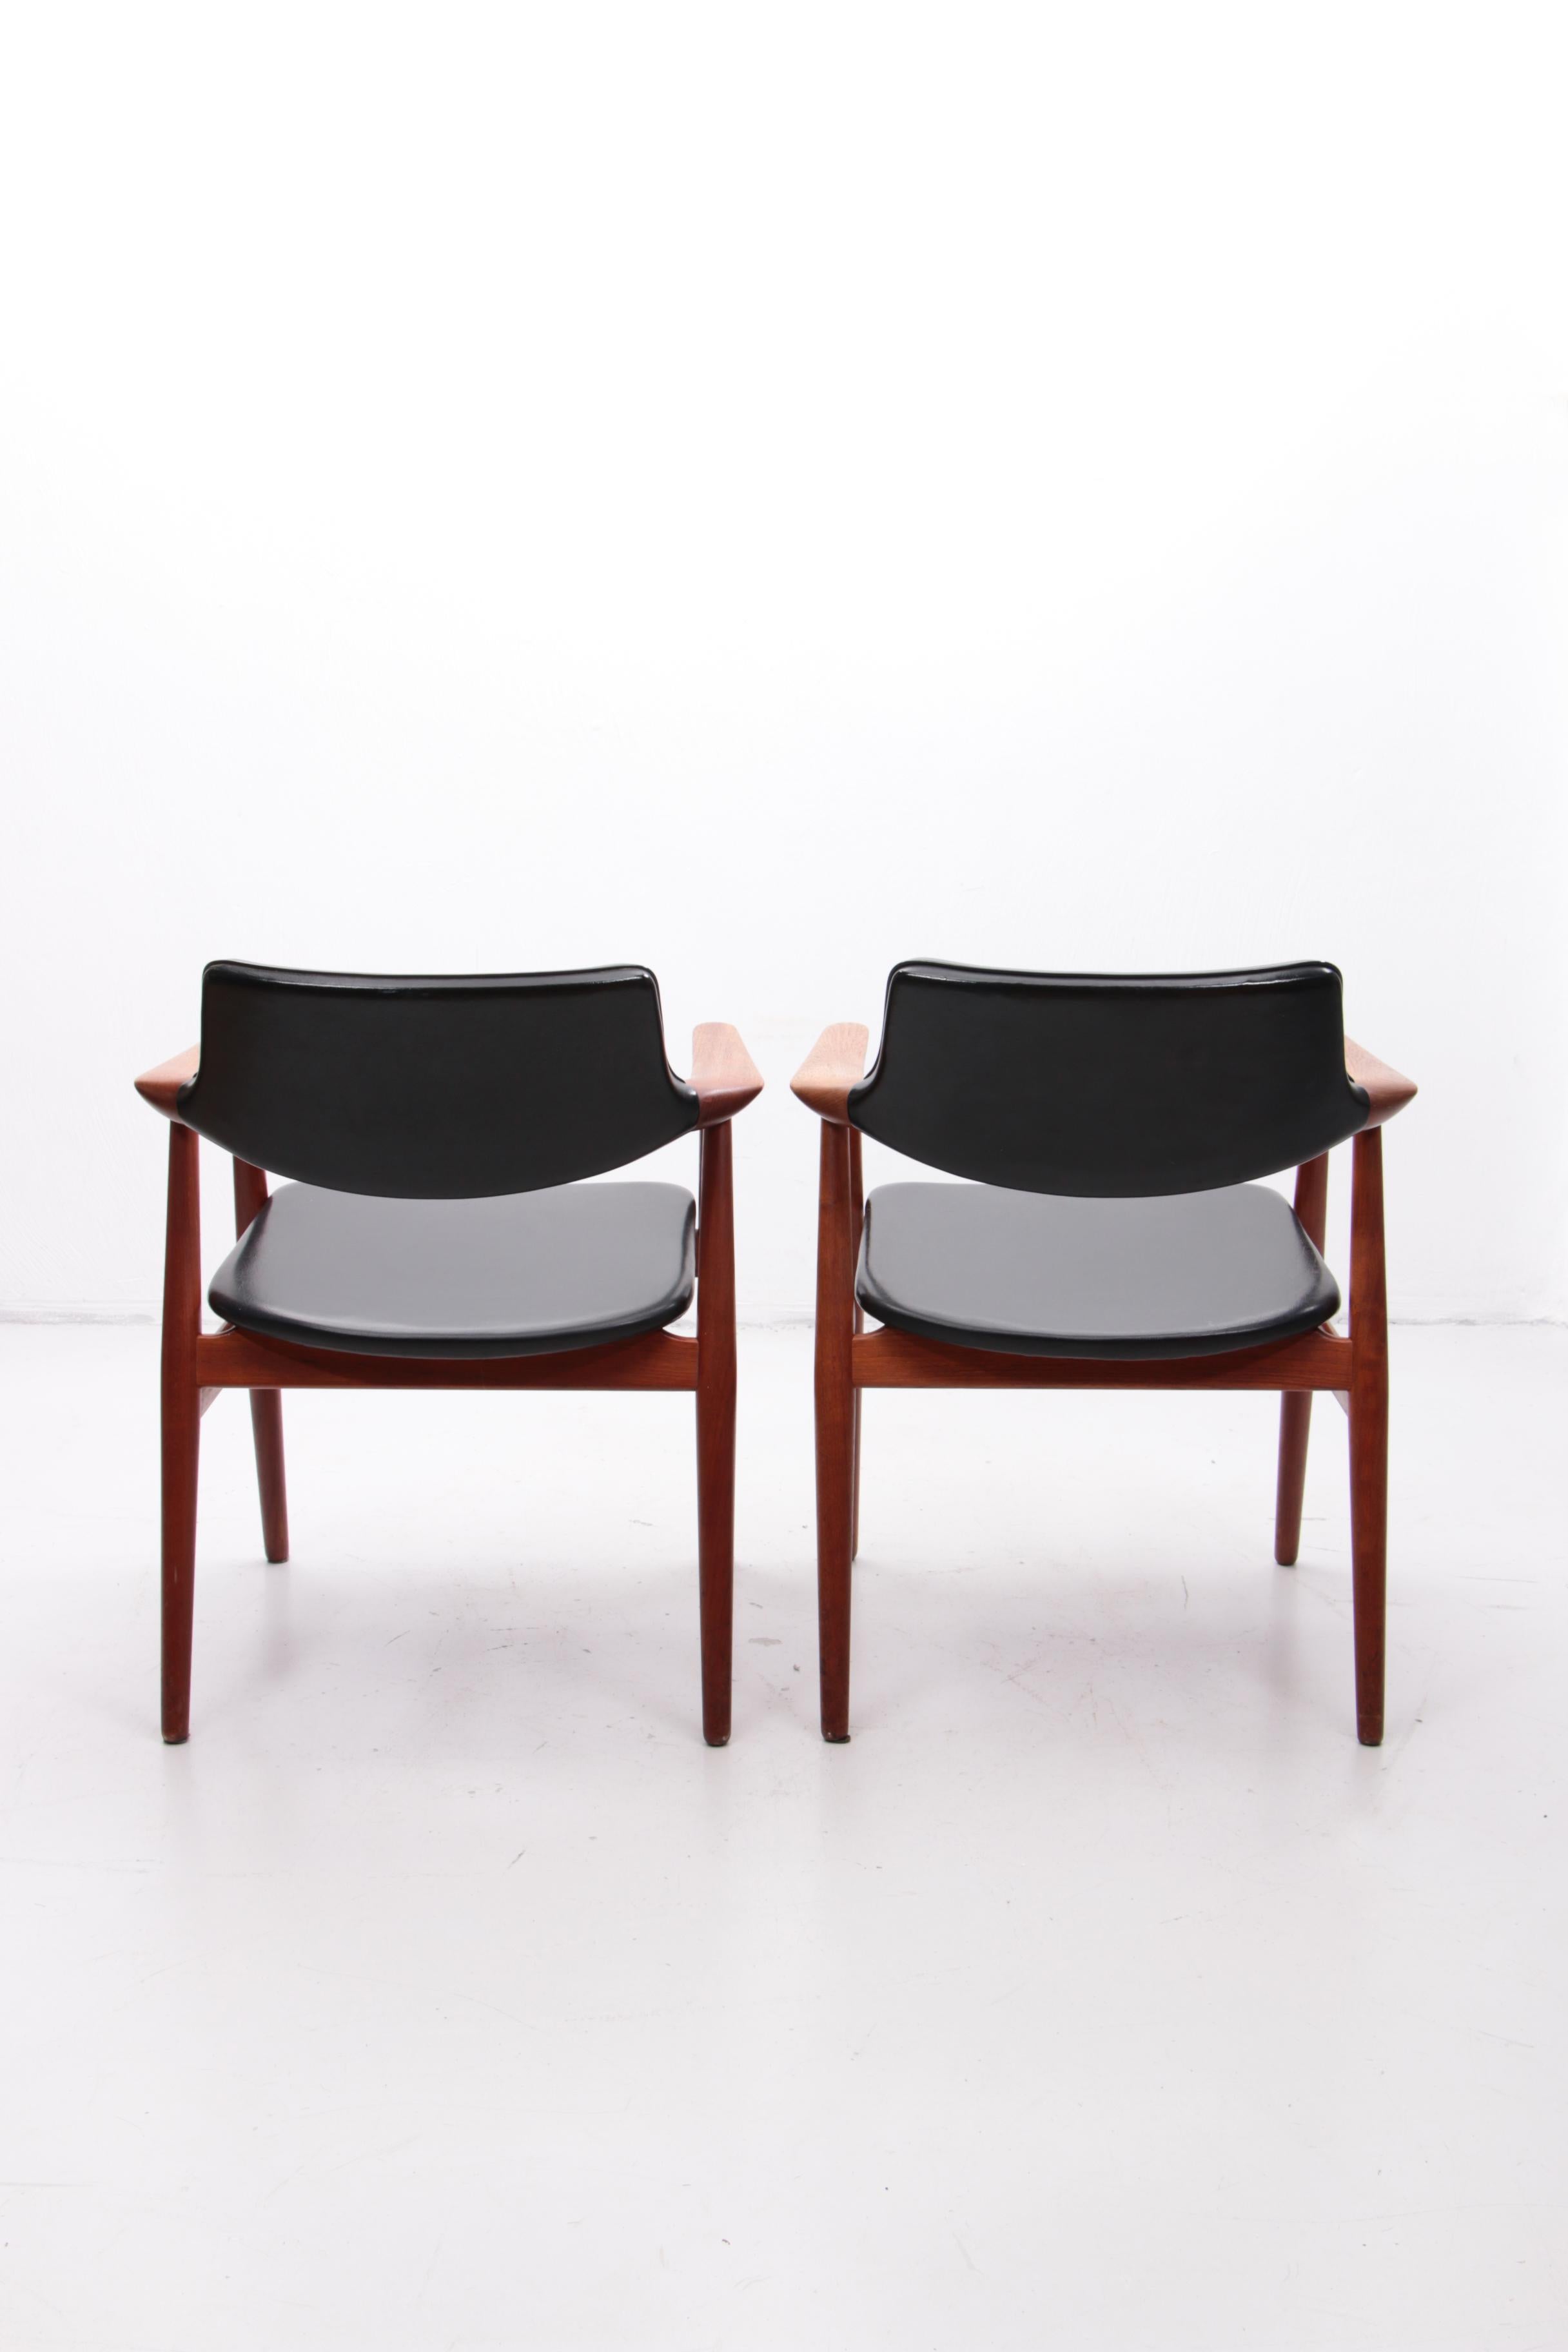 Danish Svend Age Eriksen Dining Room Chair Model Gm11, 1960 For Sale